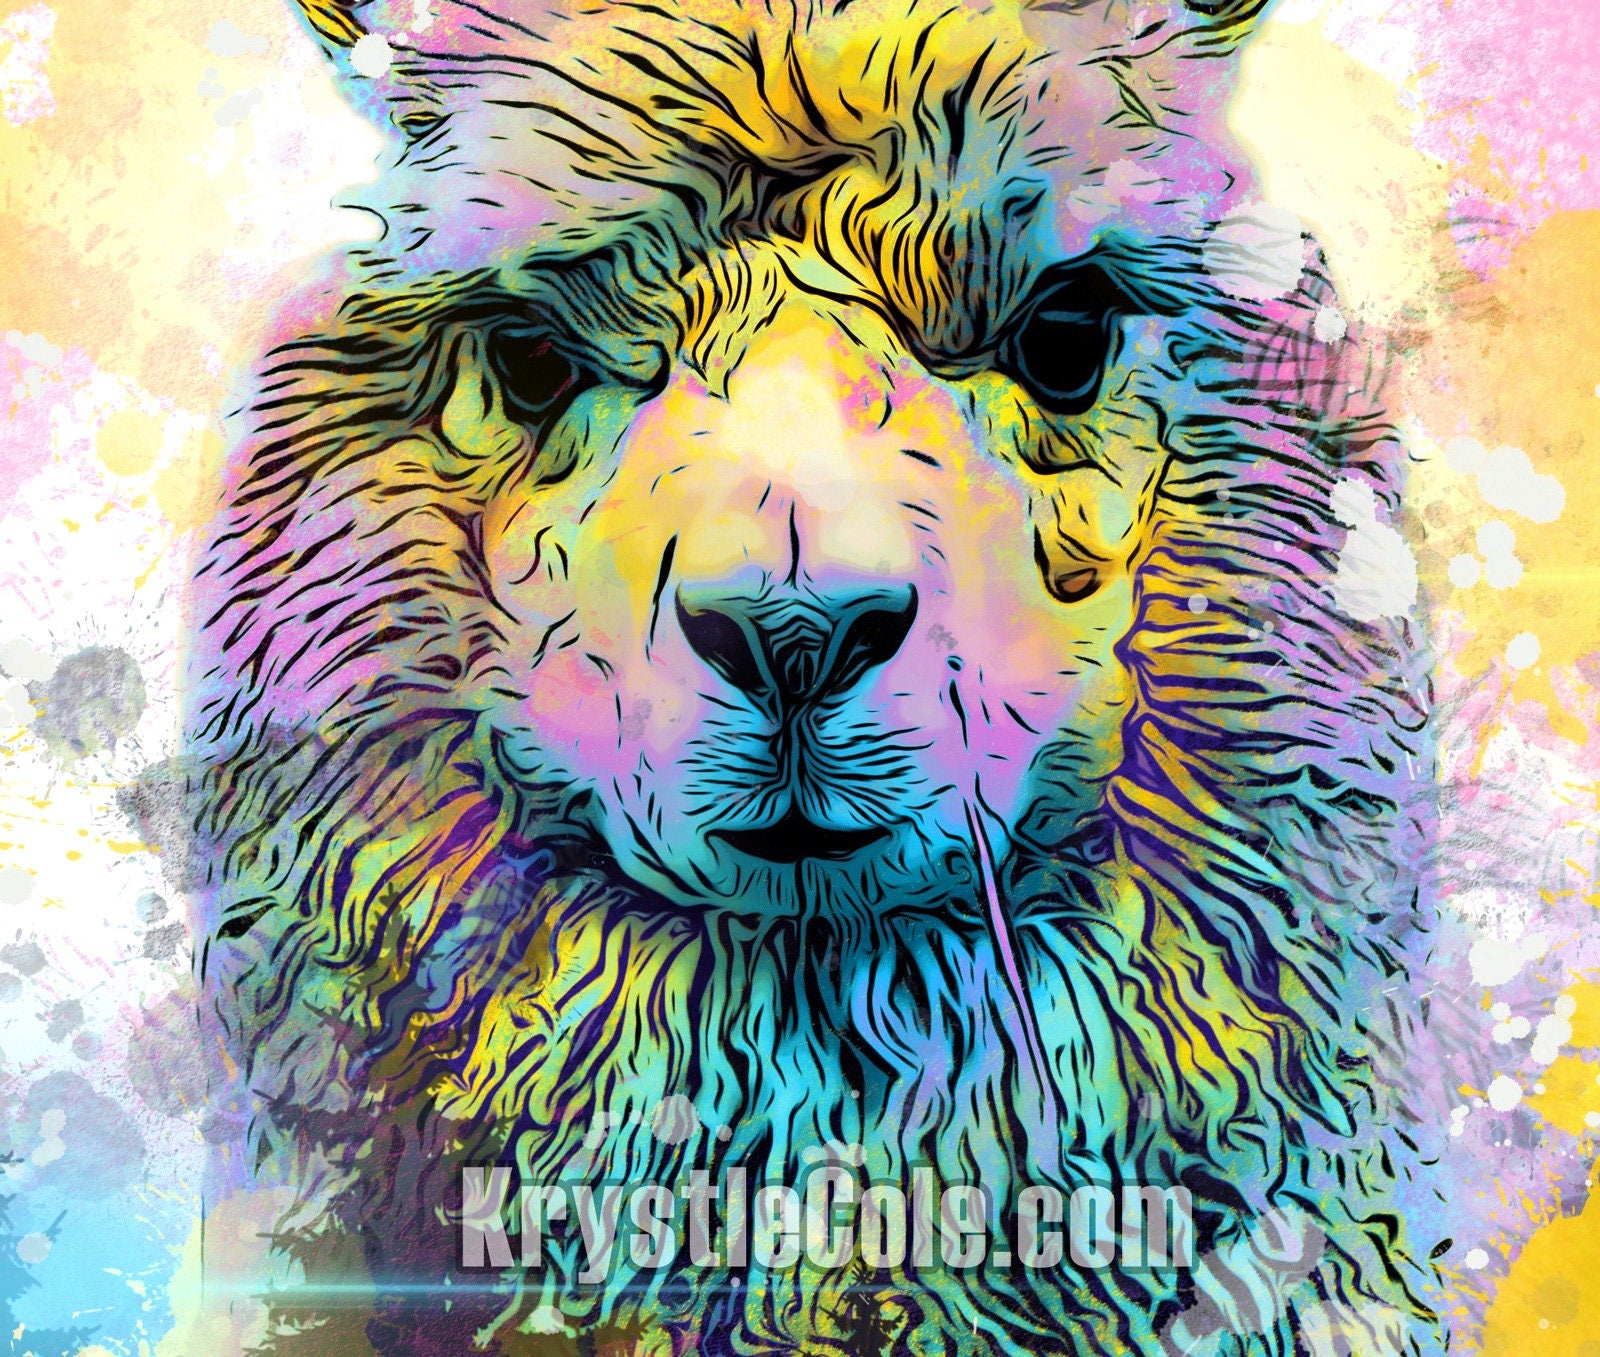 Rainbow Llama Art Print. Alpaca Wall Decor. Artwork on CANVAS or PAPER *Each Print Hand Signed*